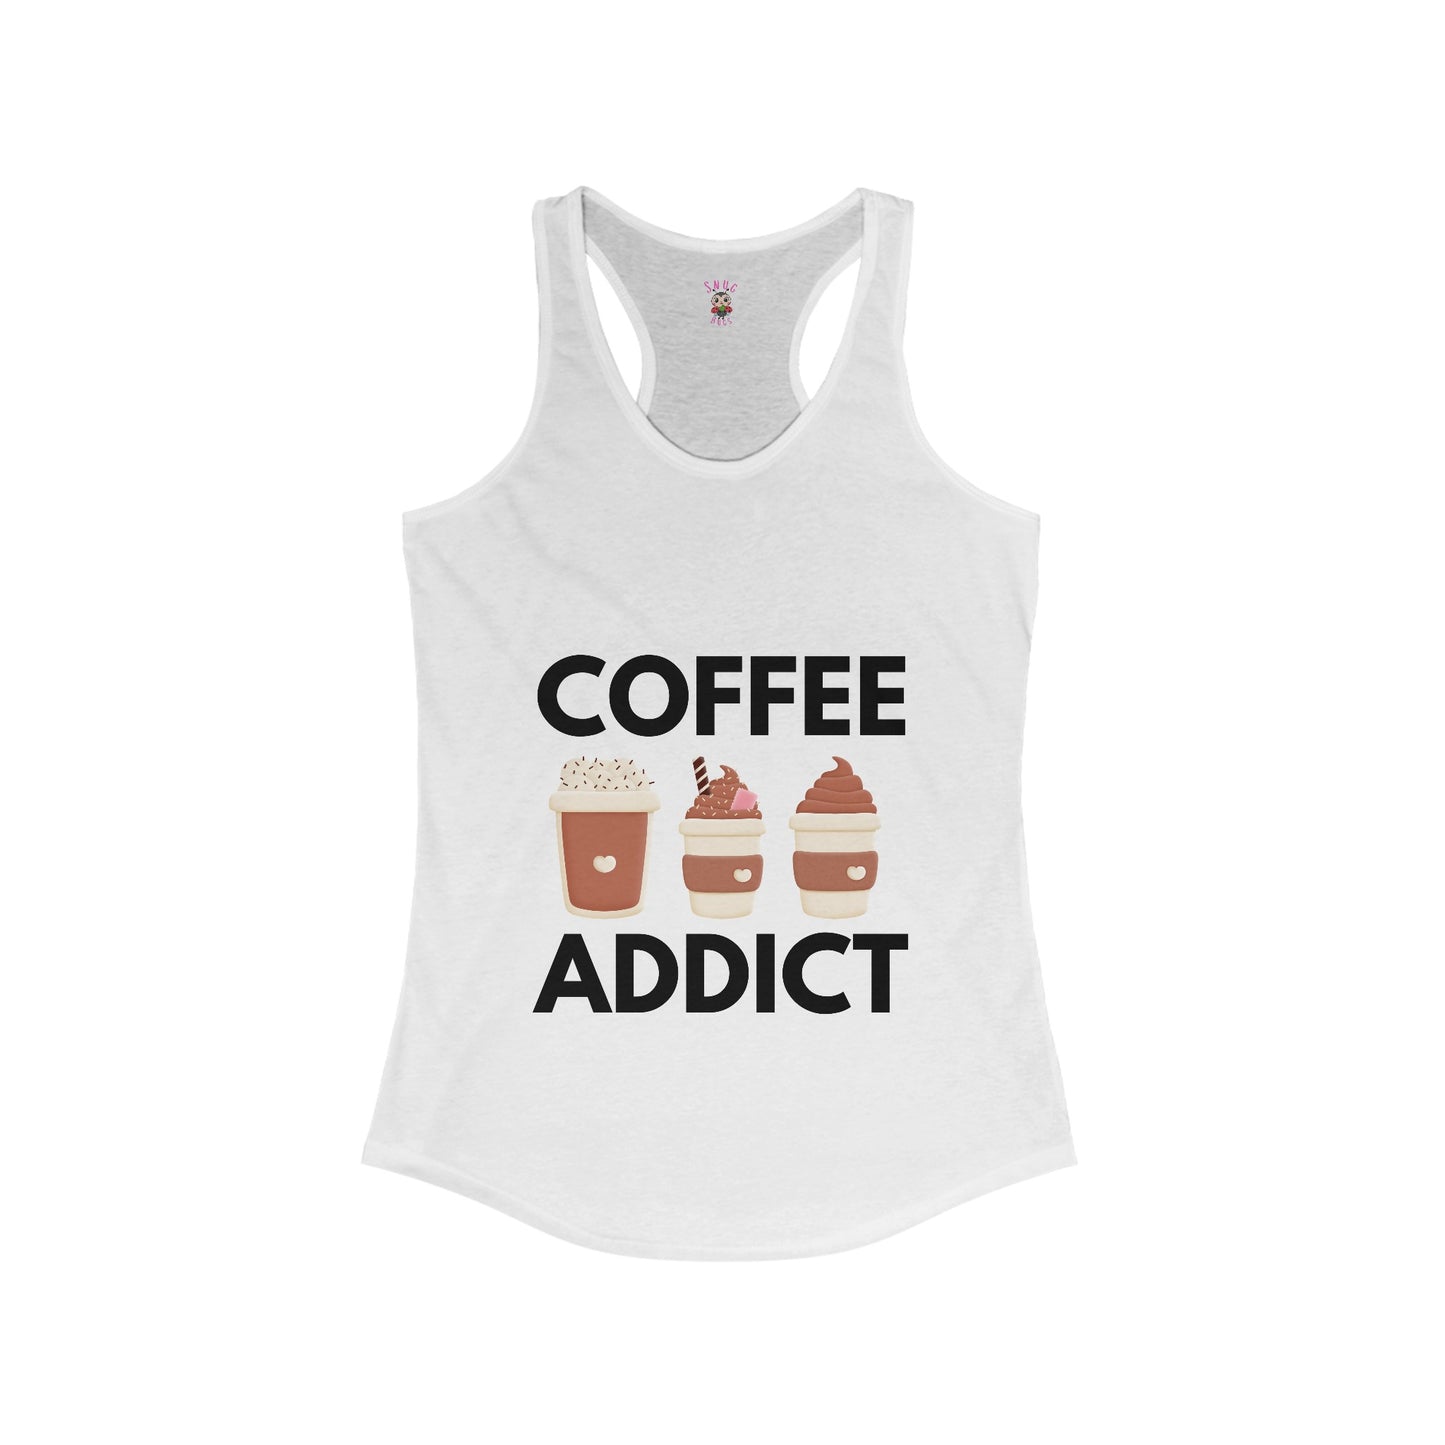 Coffee Addict! Women's Ideal Racerback Tank